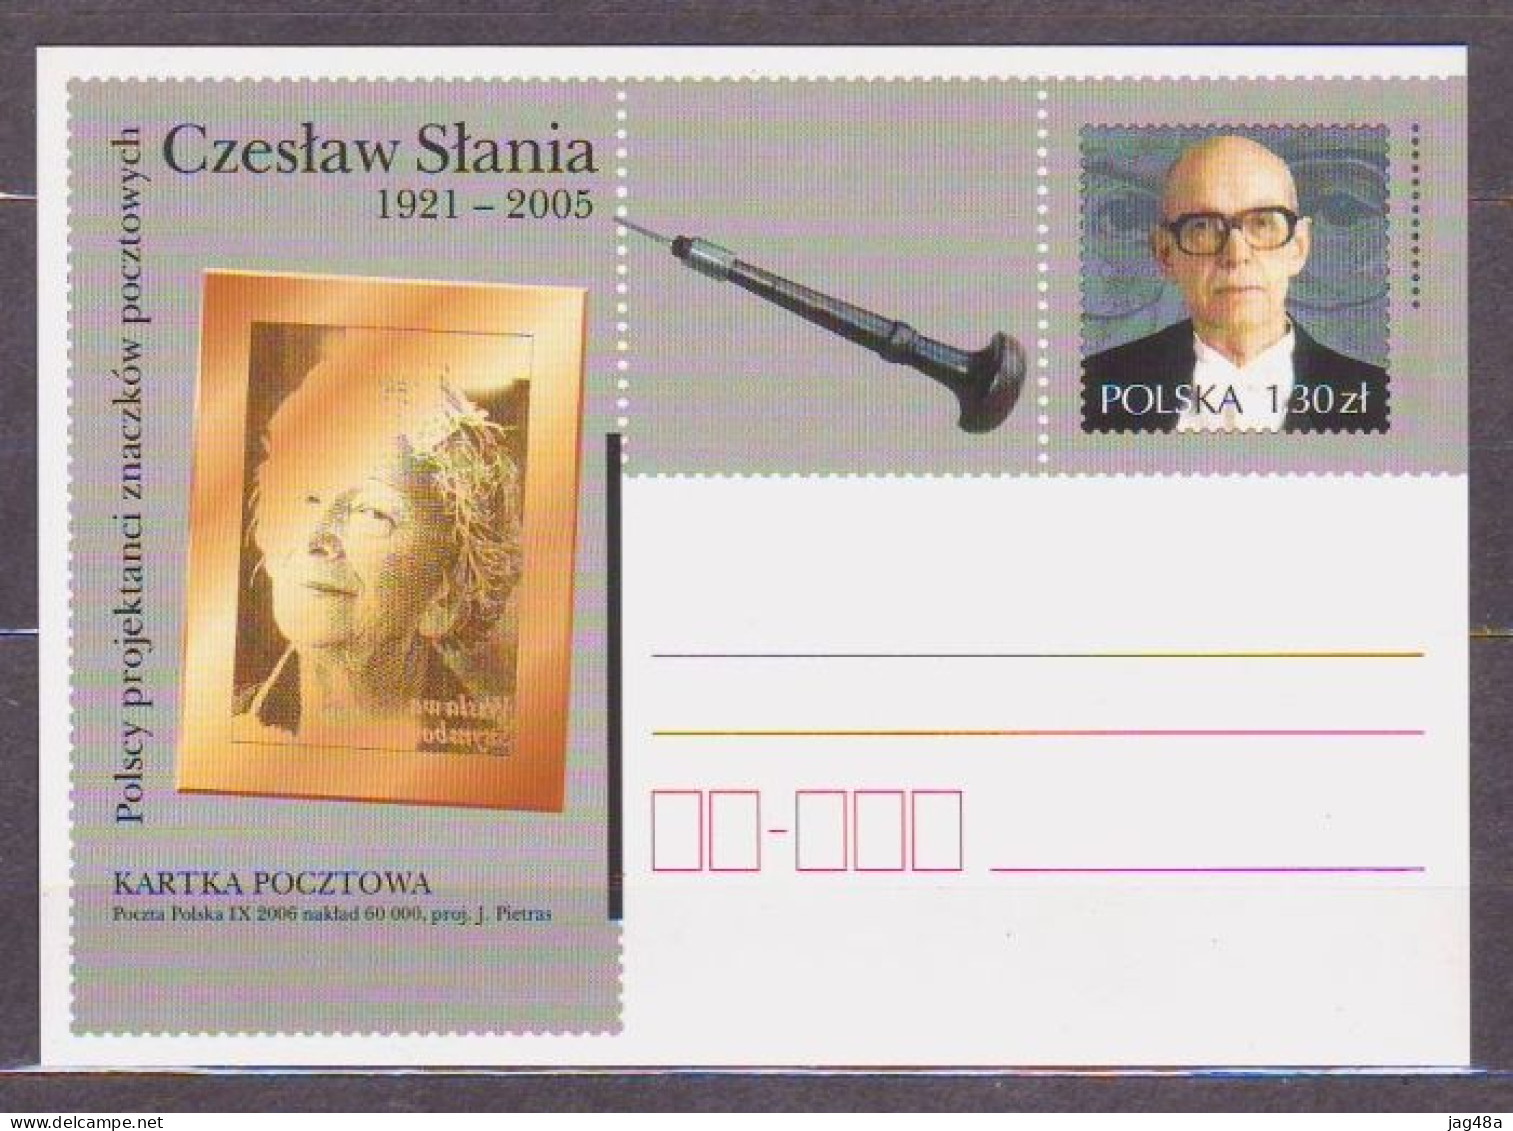 POLAND..2006/CZESLAW SLANIA, Polish Postage Stamp And Banknote Engraver.. PostCard/unused. - Covers & Documents